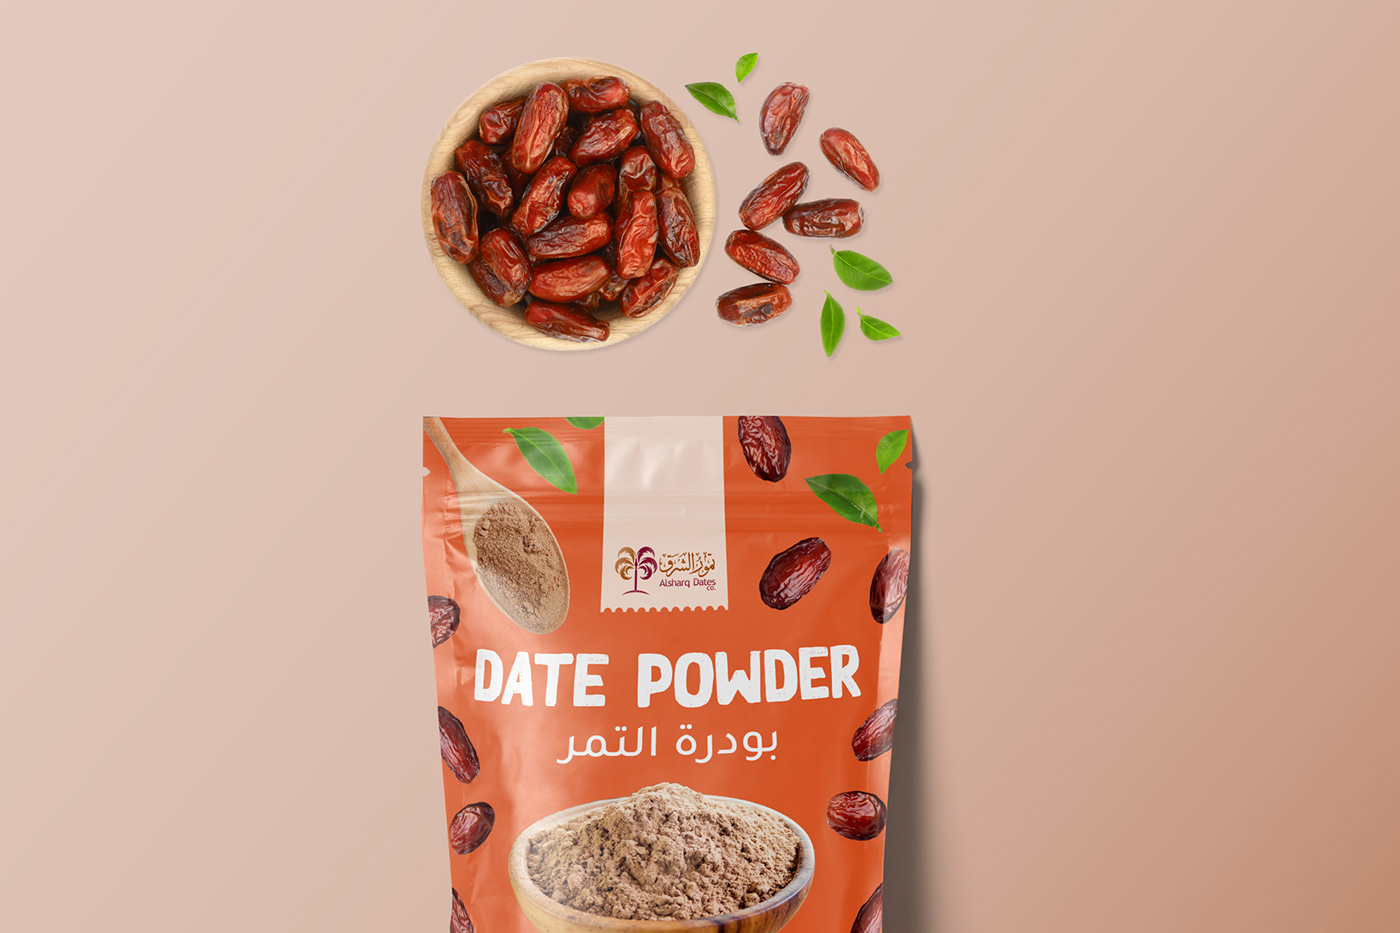 date powder Date Sugar Food Packaging healthy food zipper pouch bag